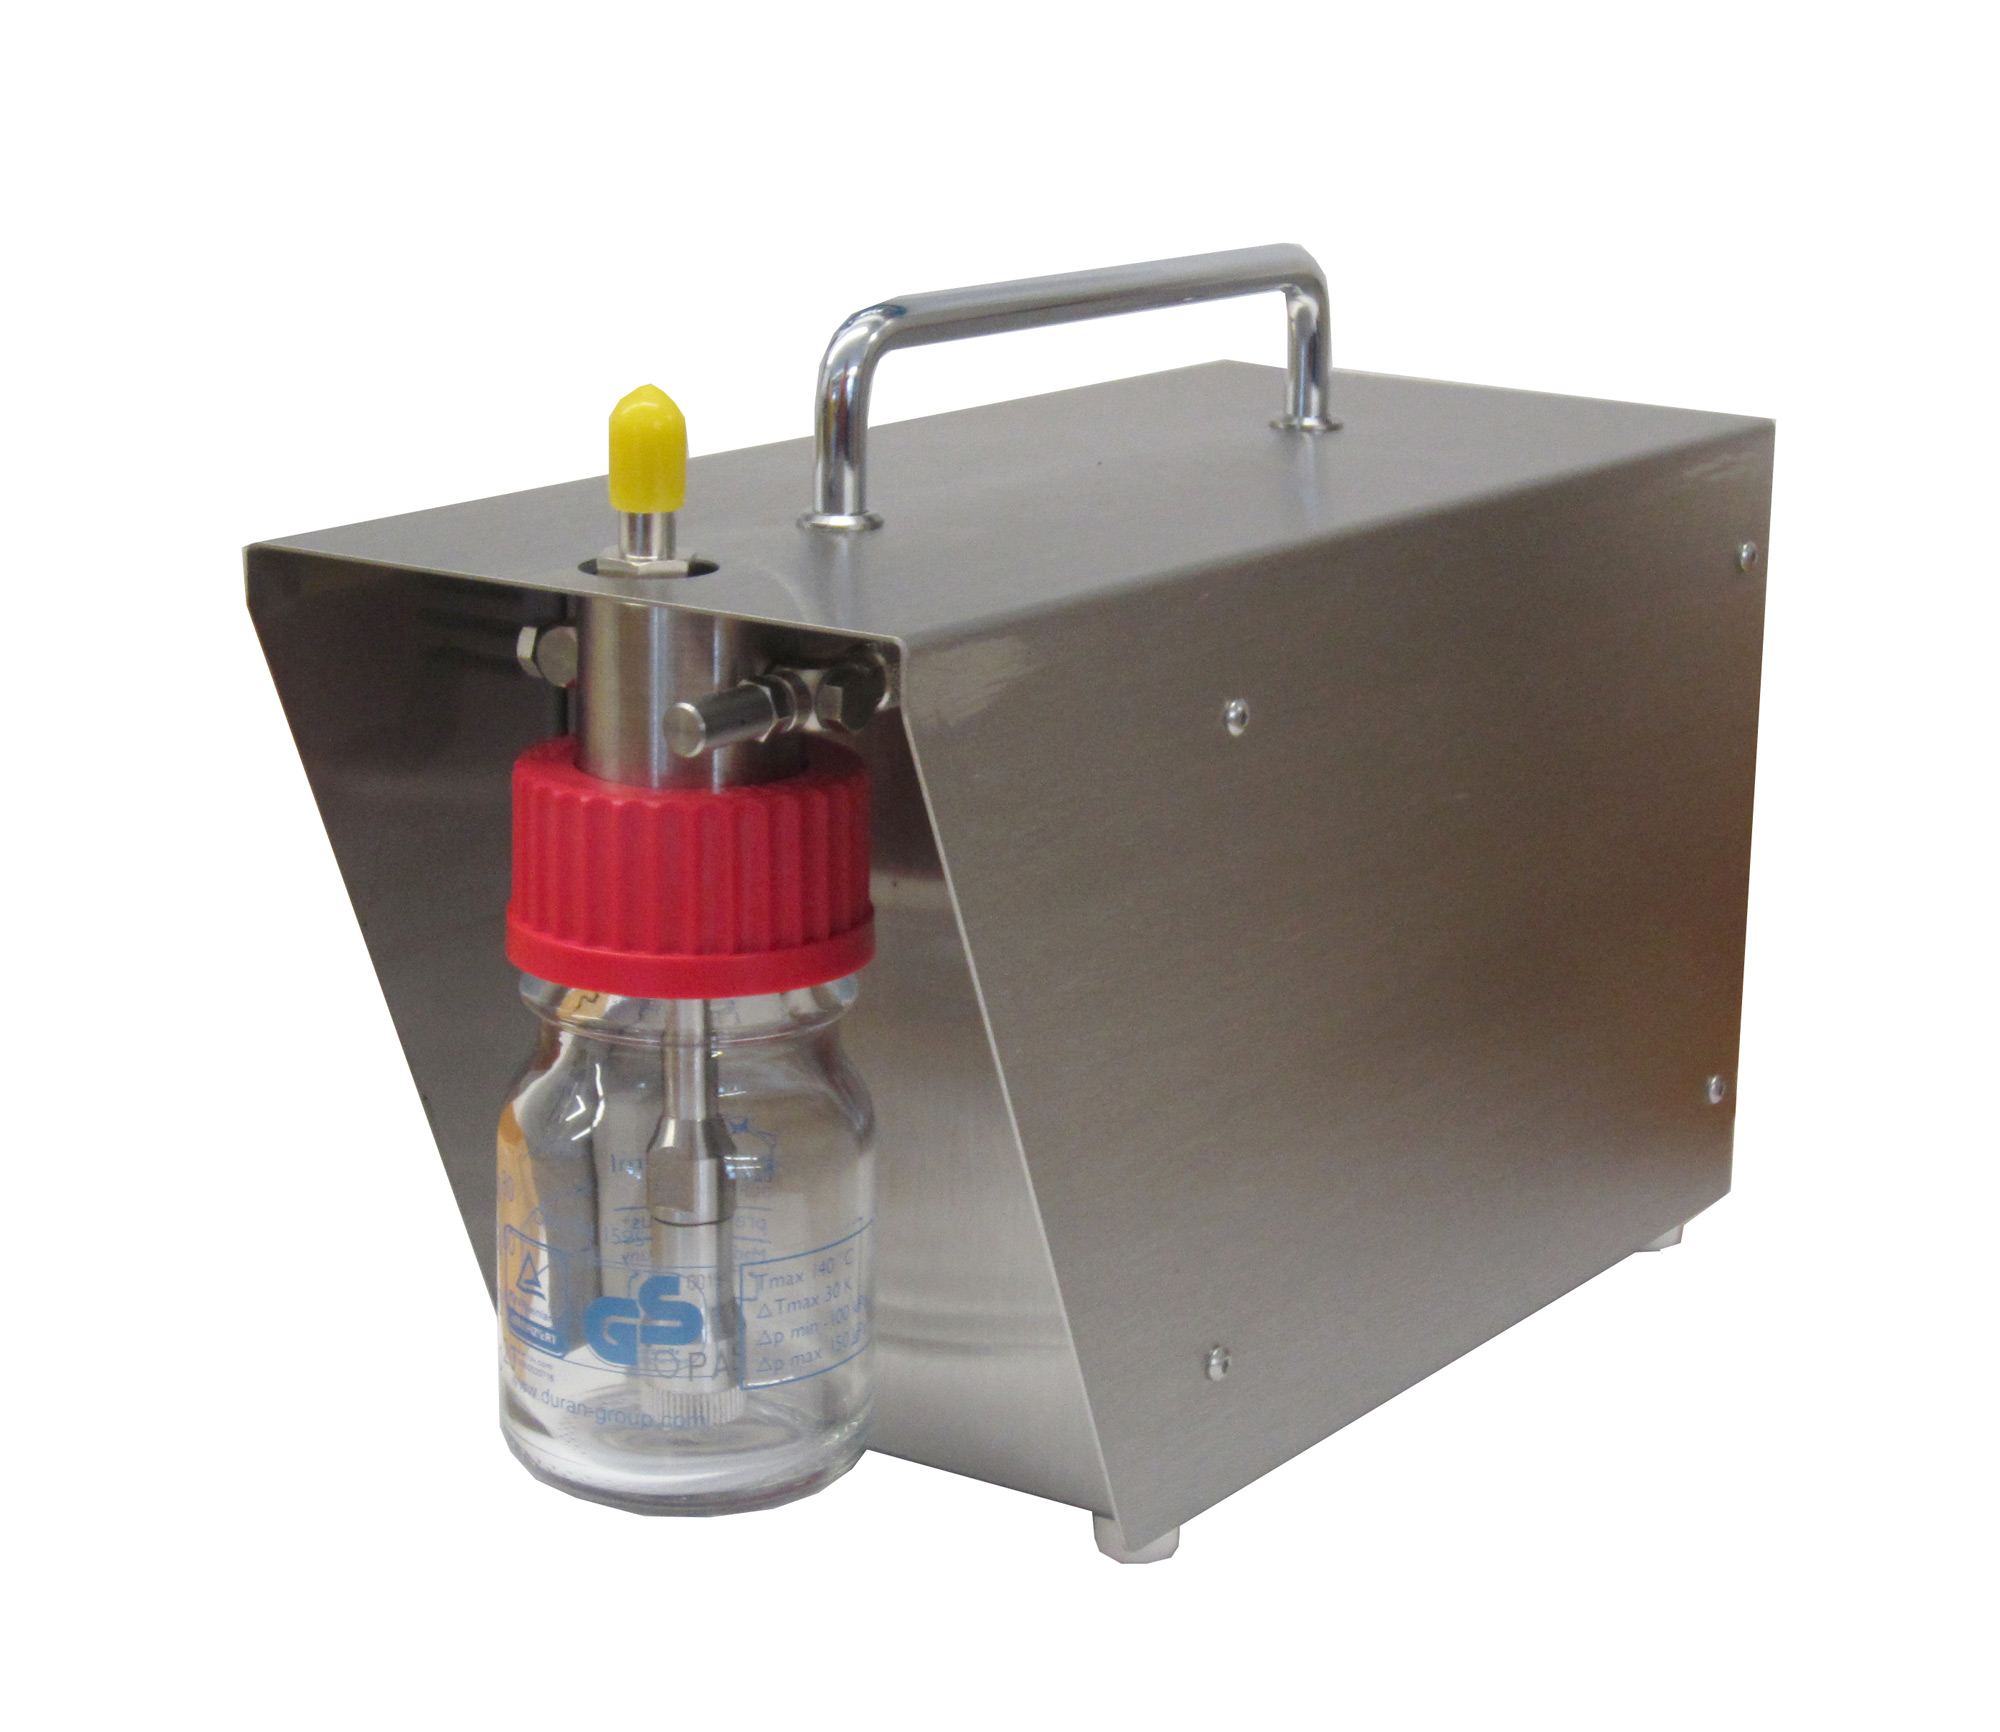 Portable aerosol generator - ATM 225 - Markus Klotz GmbH - mobile / atomizer